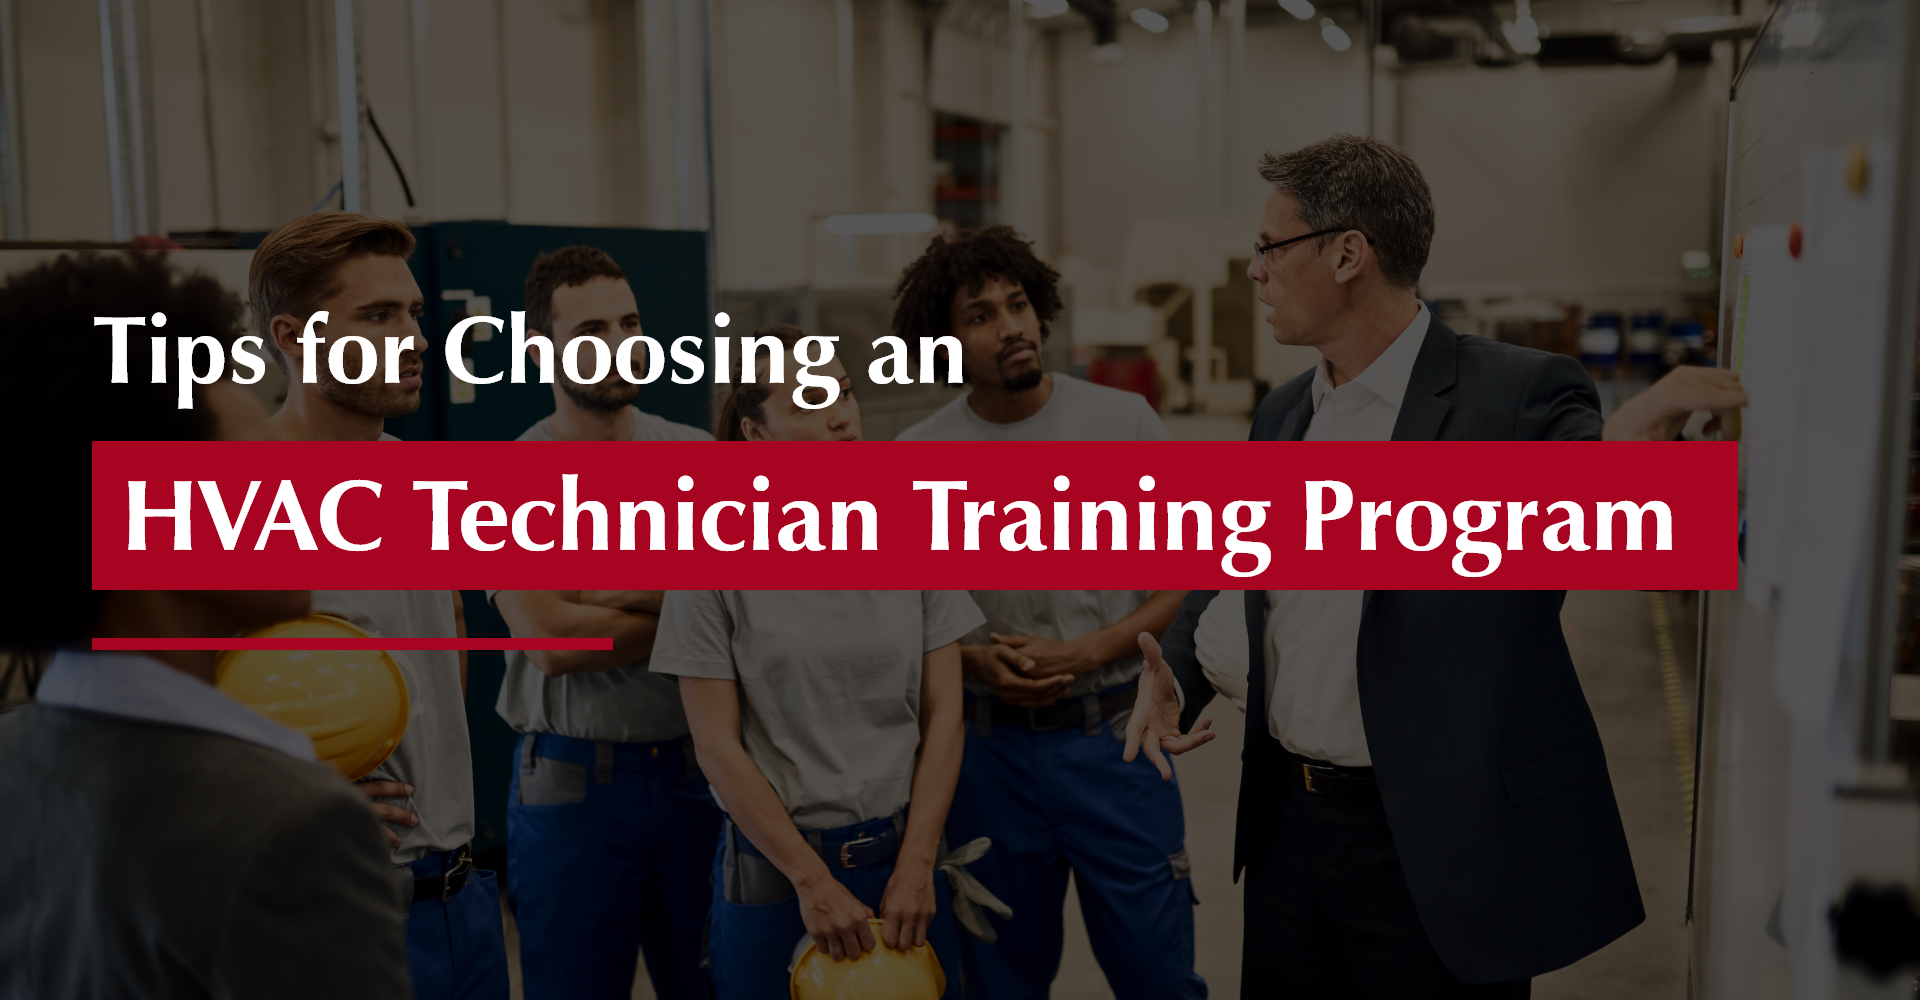 Tips for Choosing an HVAC Technician Training Program